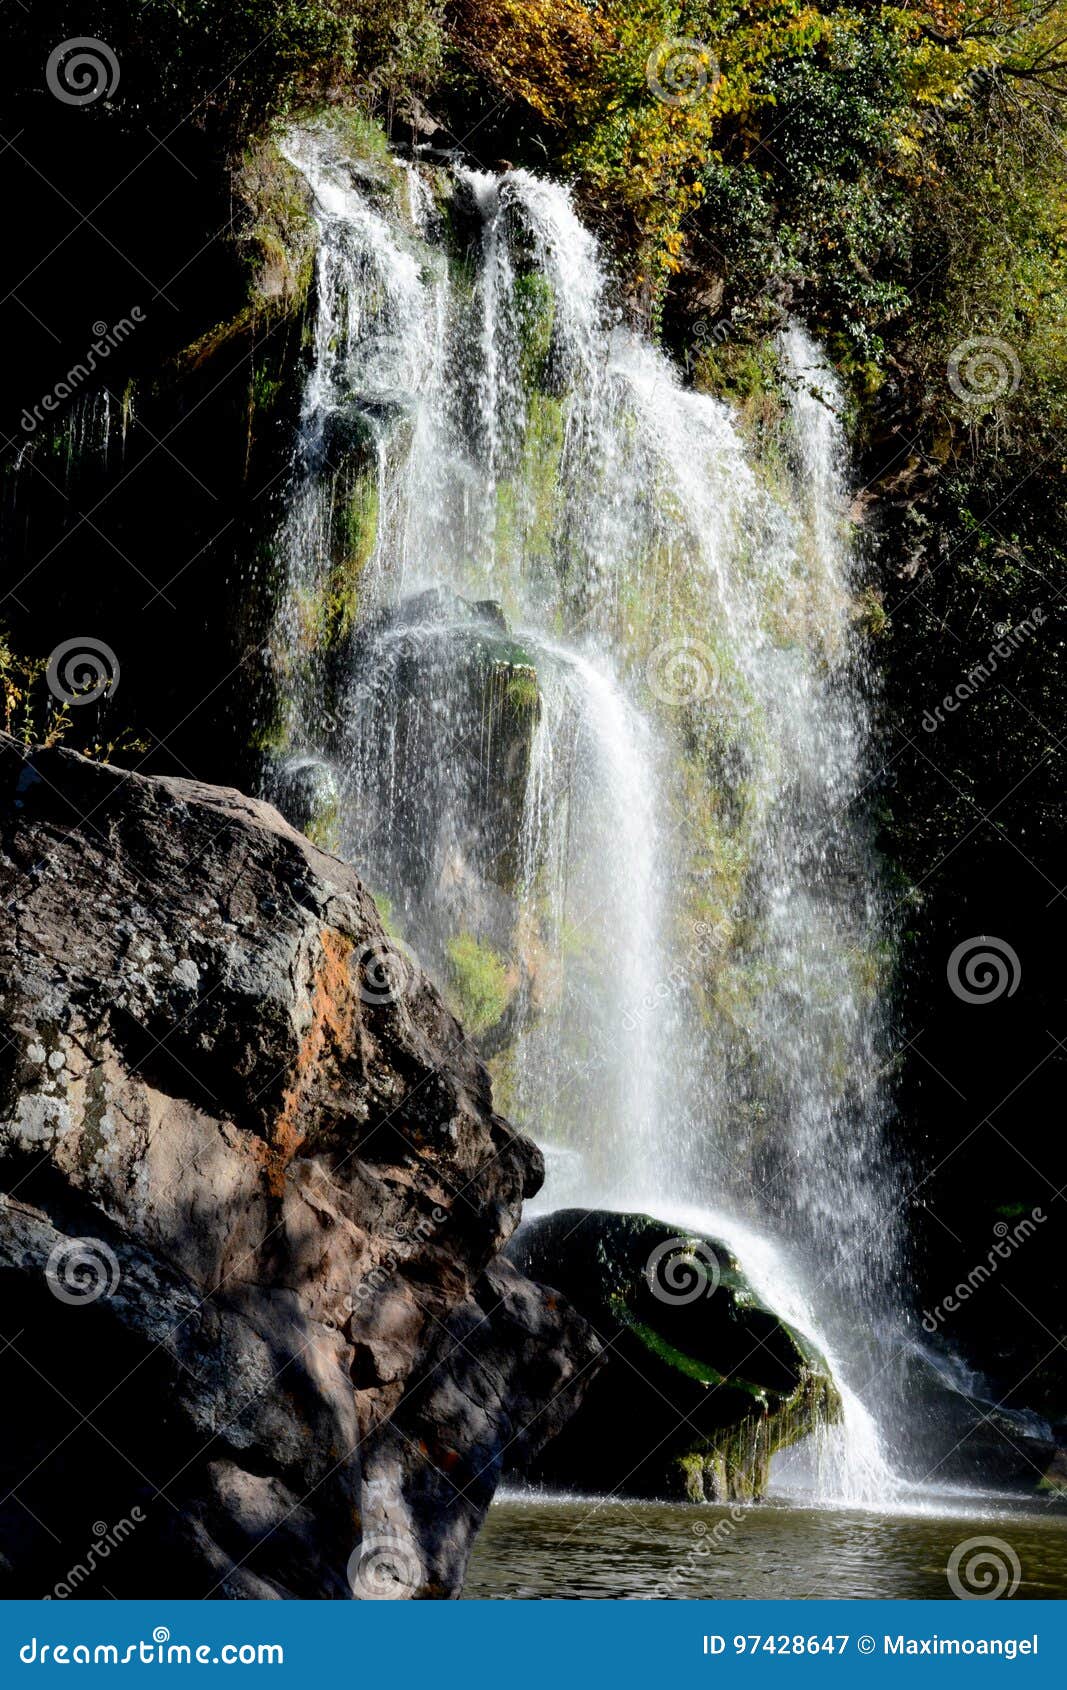 seven waterfalls